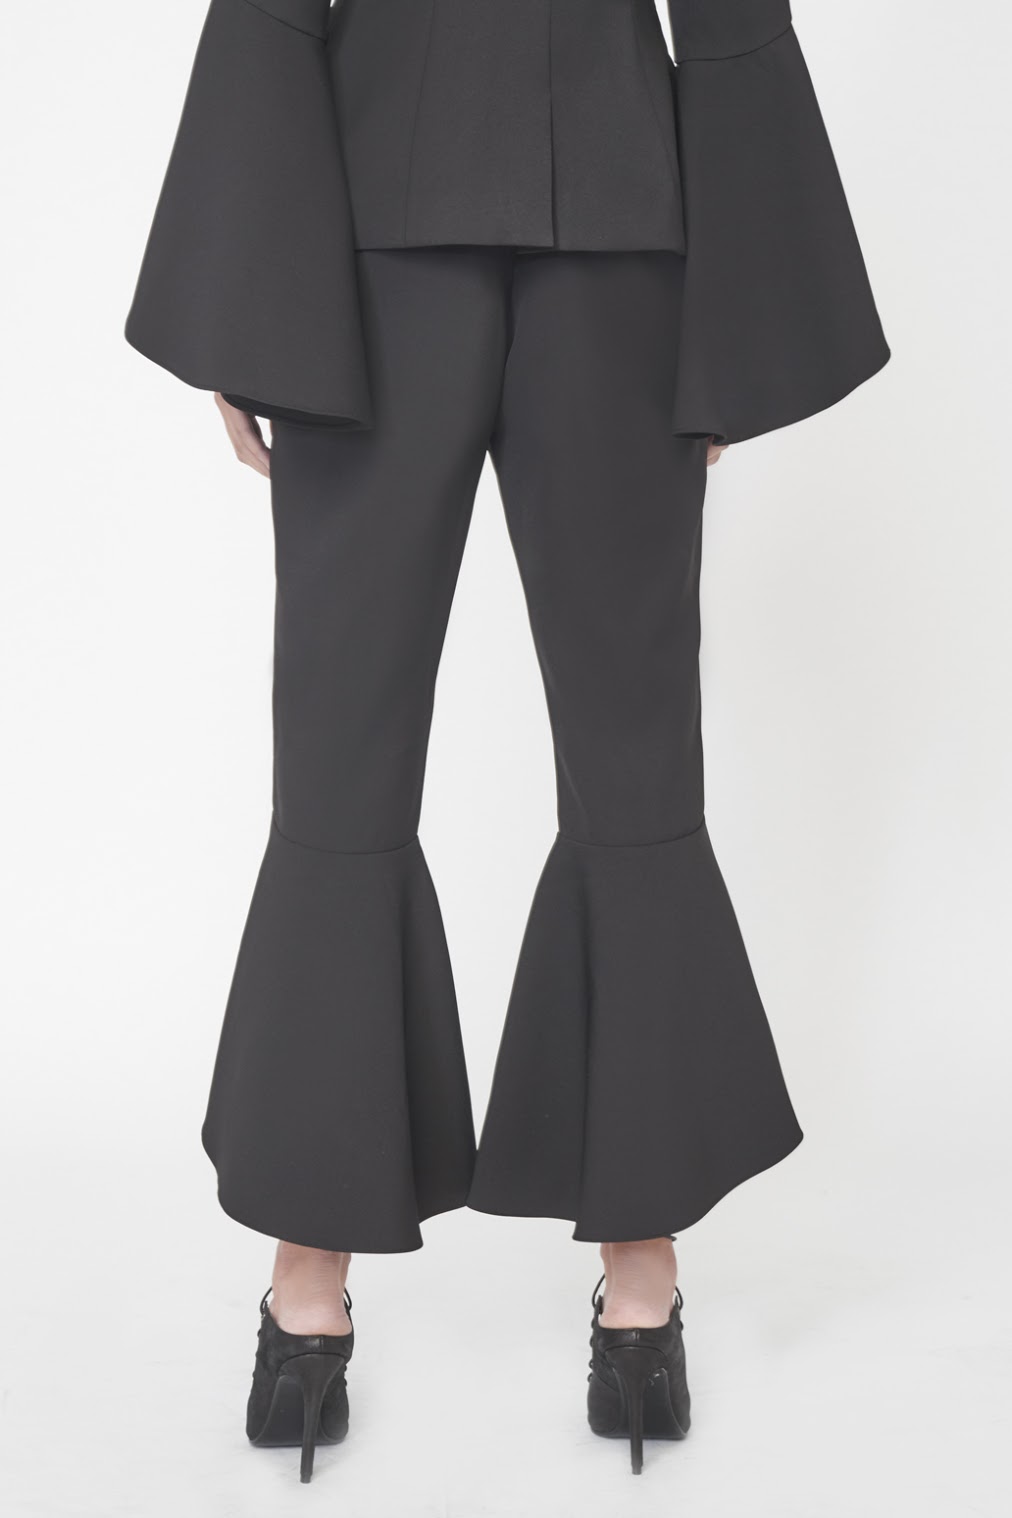 Lavish Alice Bell Ruffled Trousers Black - FINAL SALE